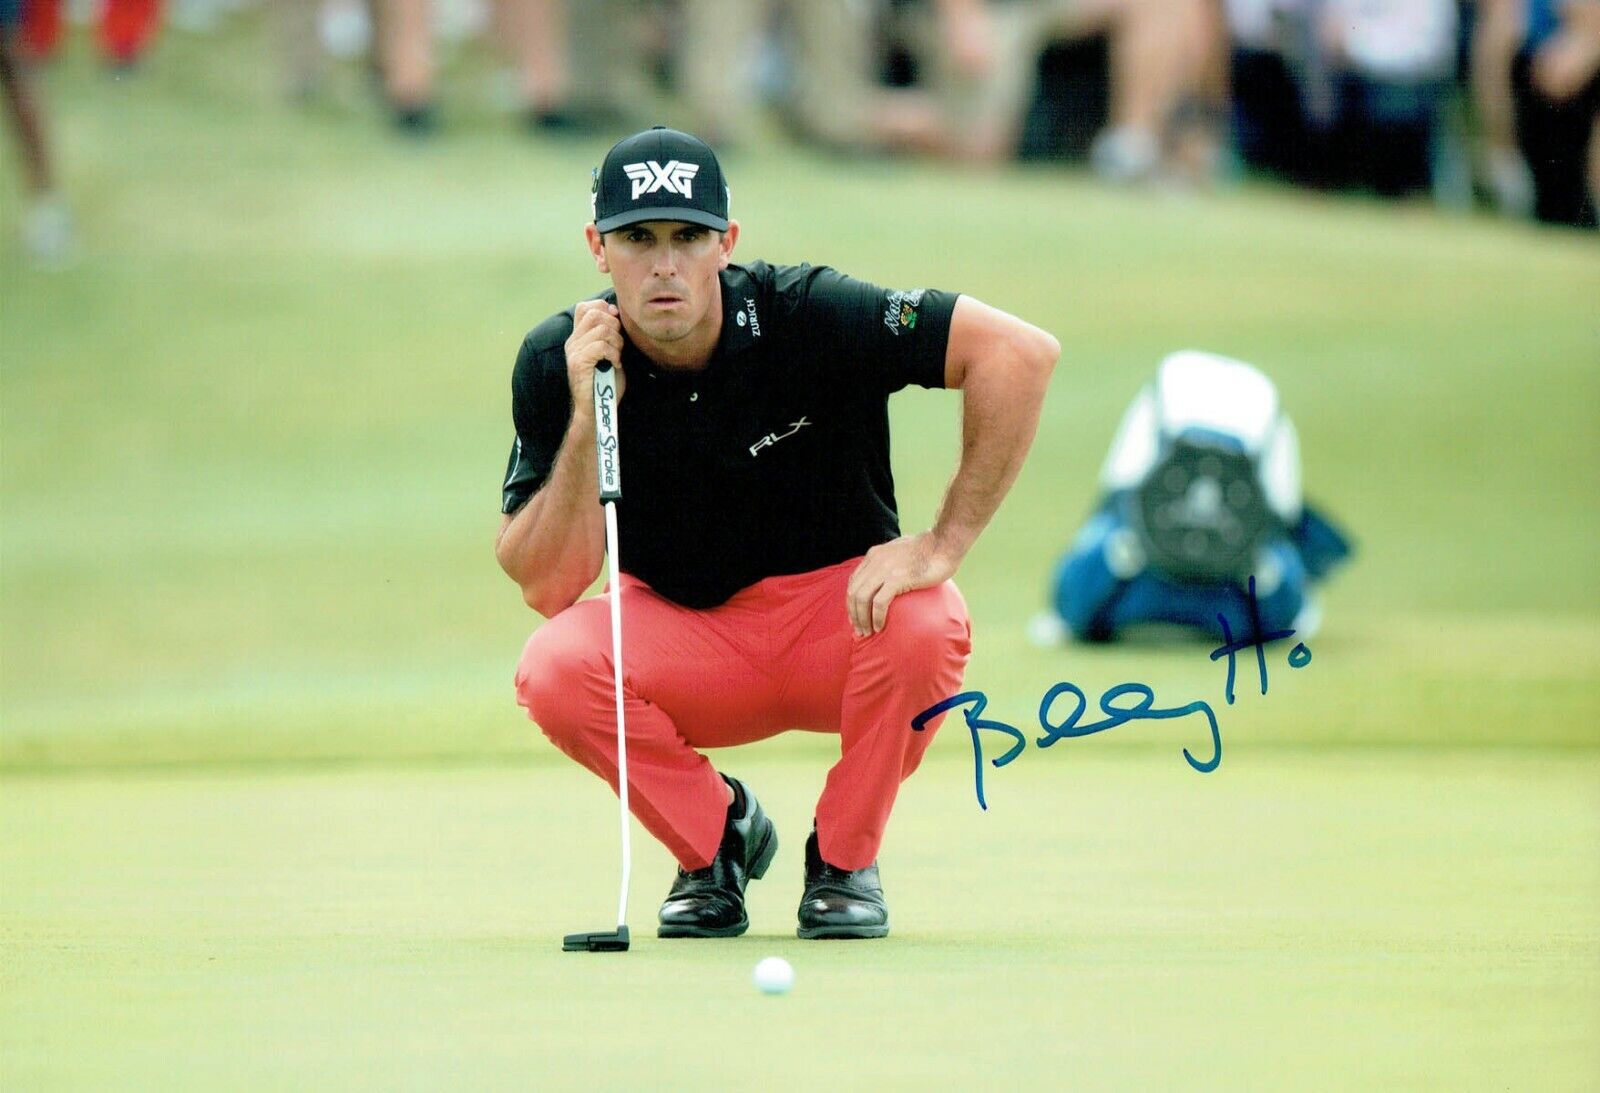 Billy HORSCHEL Signed 12x8 Photo Poster painting 3 Byron Nelson Golf Winner Autograph AFTAL COA